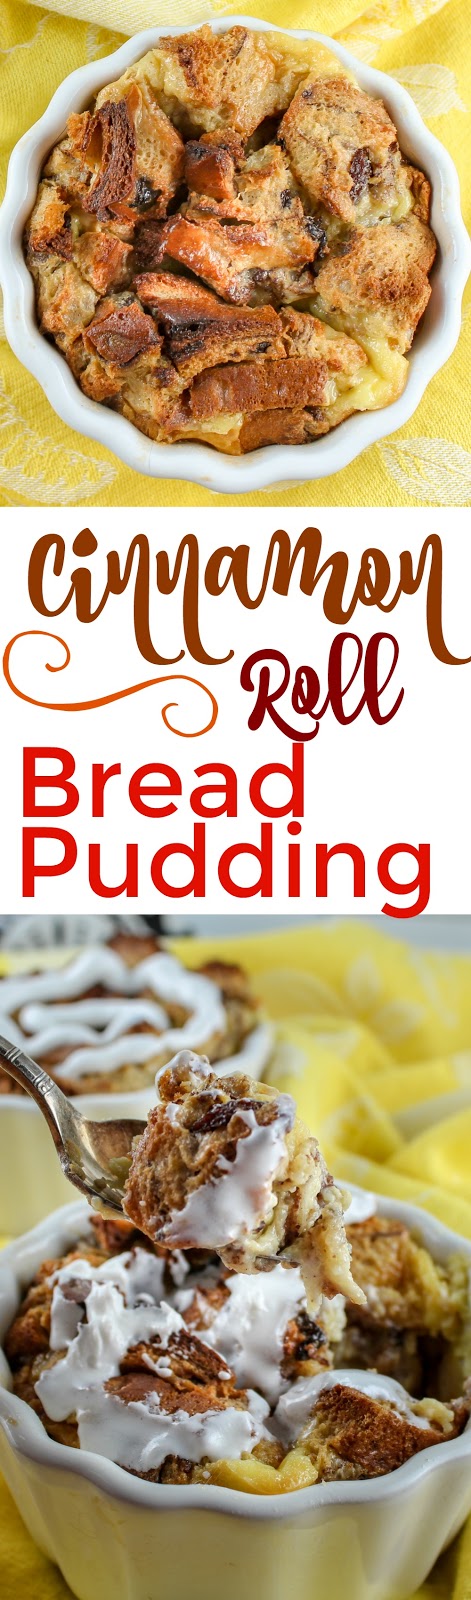 Recipe: Mini Cinnamon Roll Bread Pudding - The Food Hussy